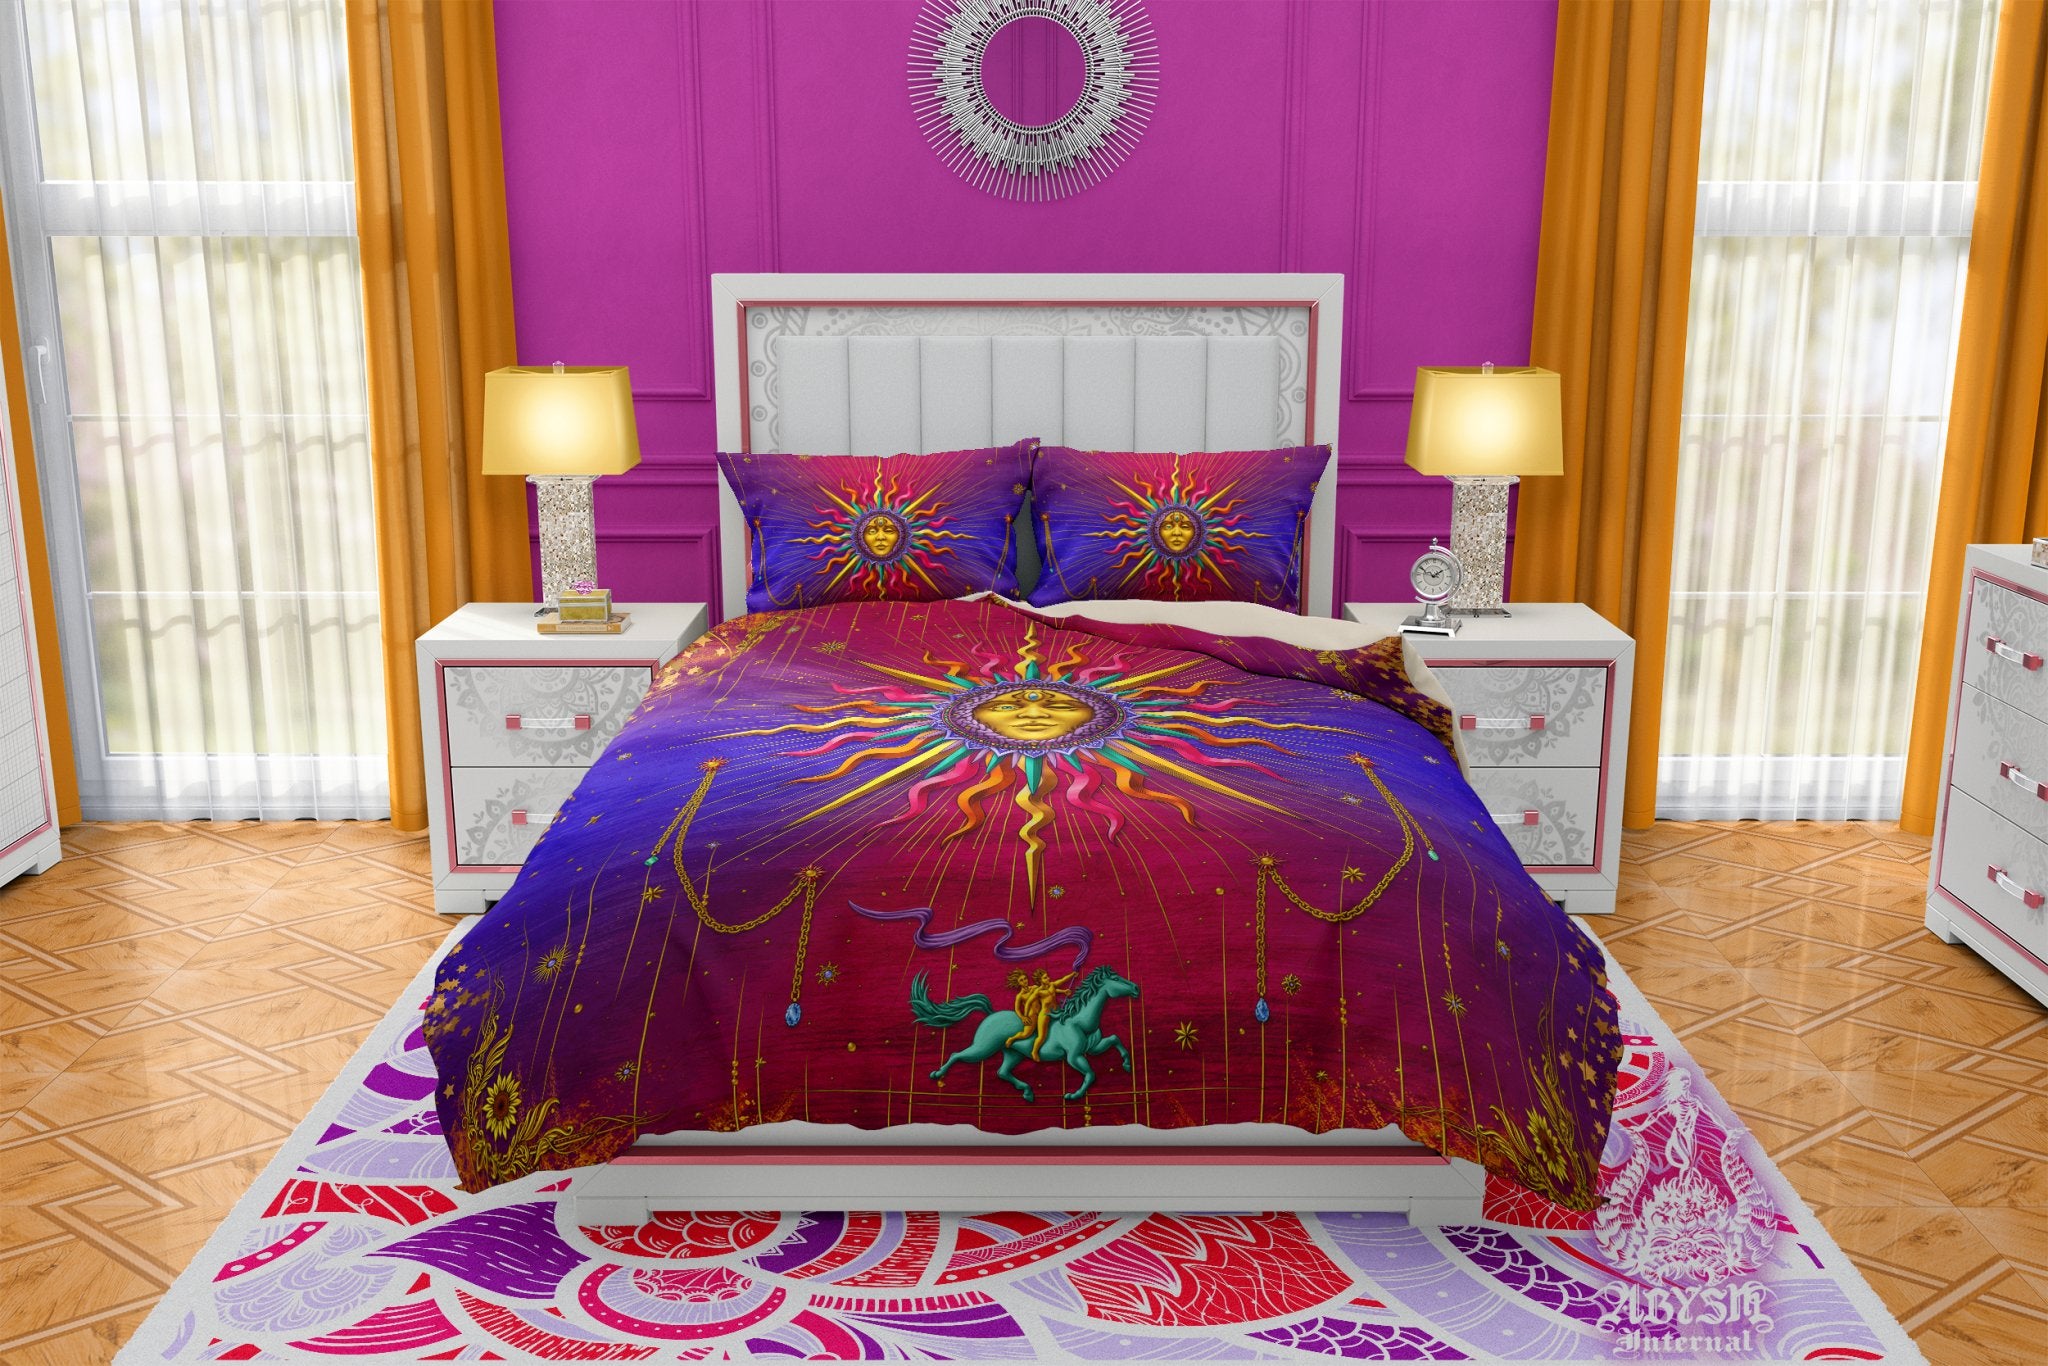 Sun Duvet Cover, Bed Covering, Esoteric Comforter, Boho Bedroom Decor King, Queen & Twin Bedding Set - Tarot Arcana Art, Psy - Abysm Internal